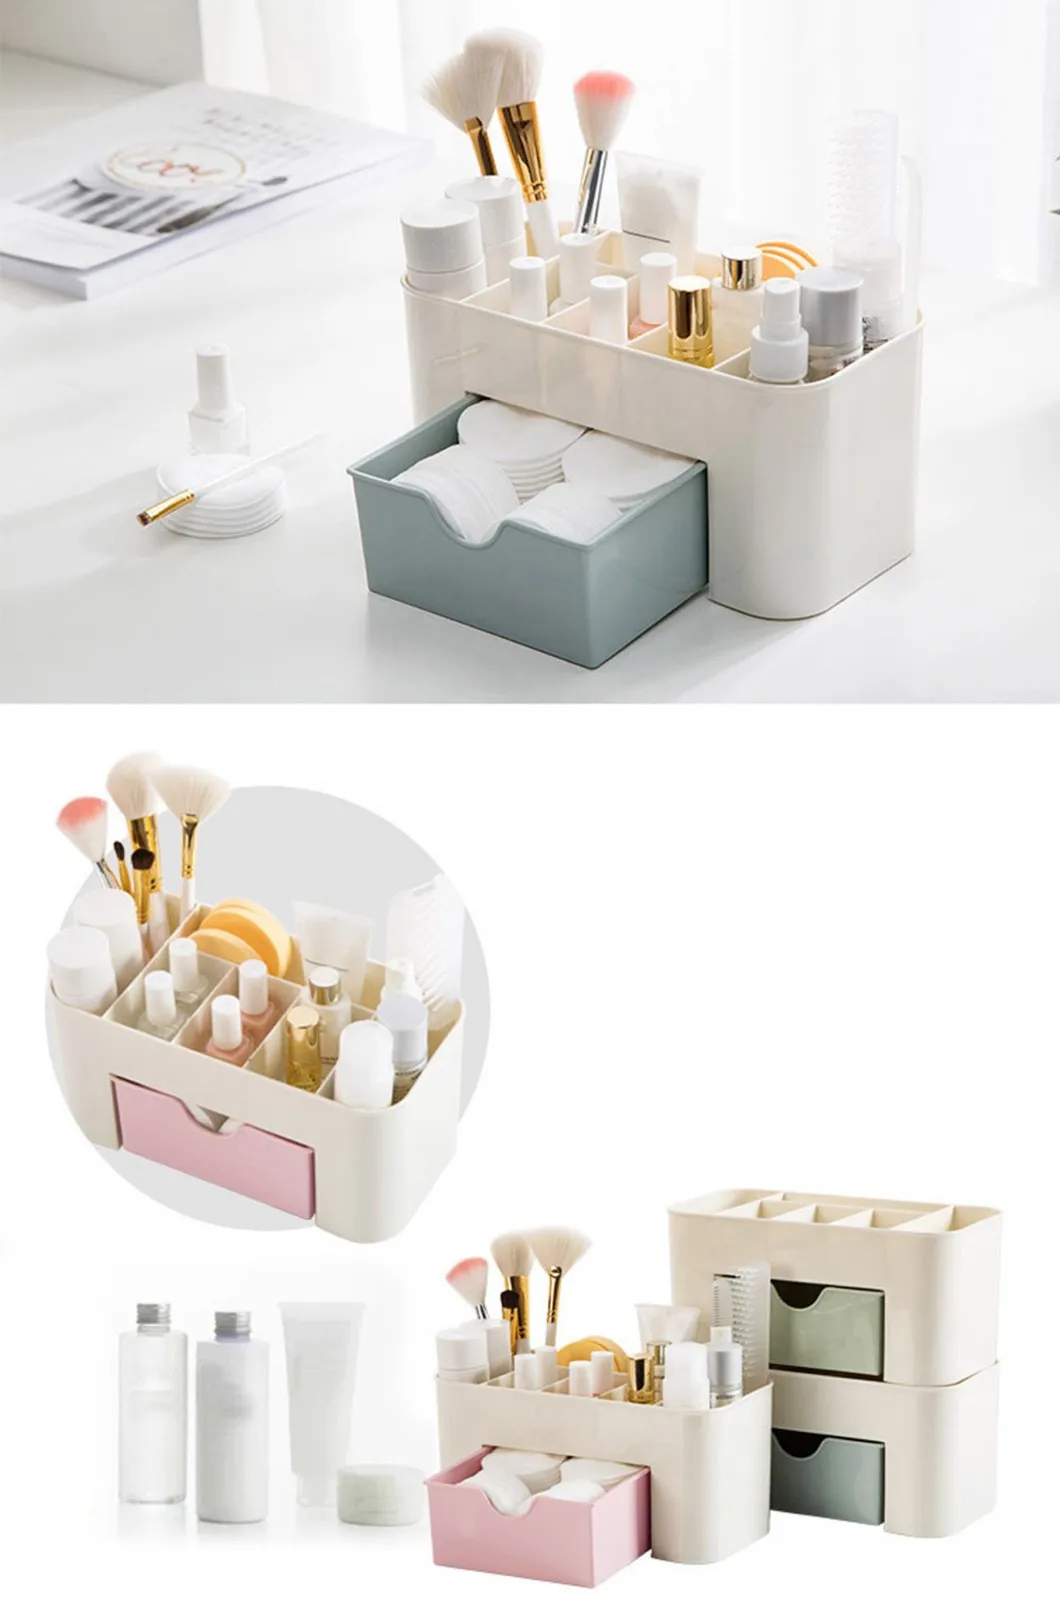 Plastic Makeup Organizer MakeUp Brush Storage Box with Drawer Cotton Swab Stick Storage Case Escritori organizador de maquillaje